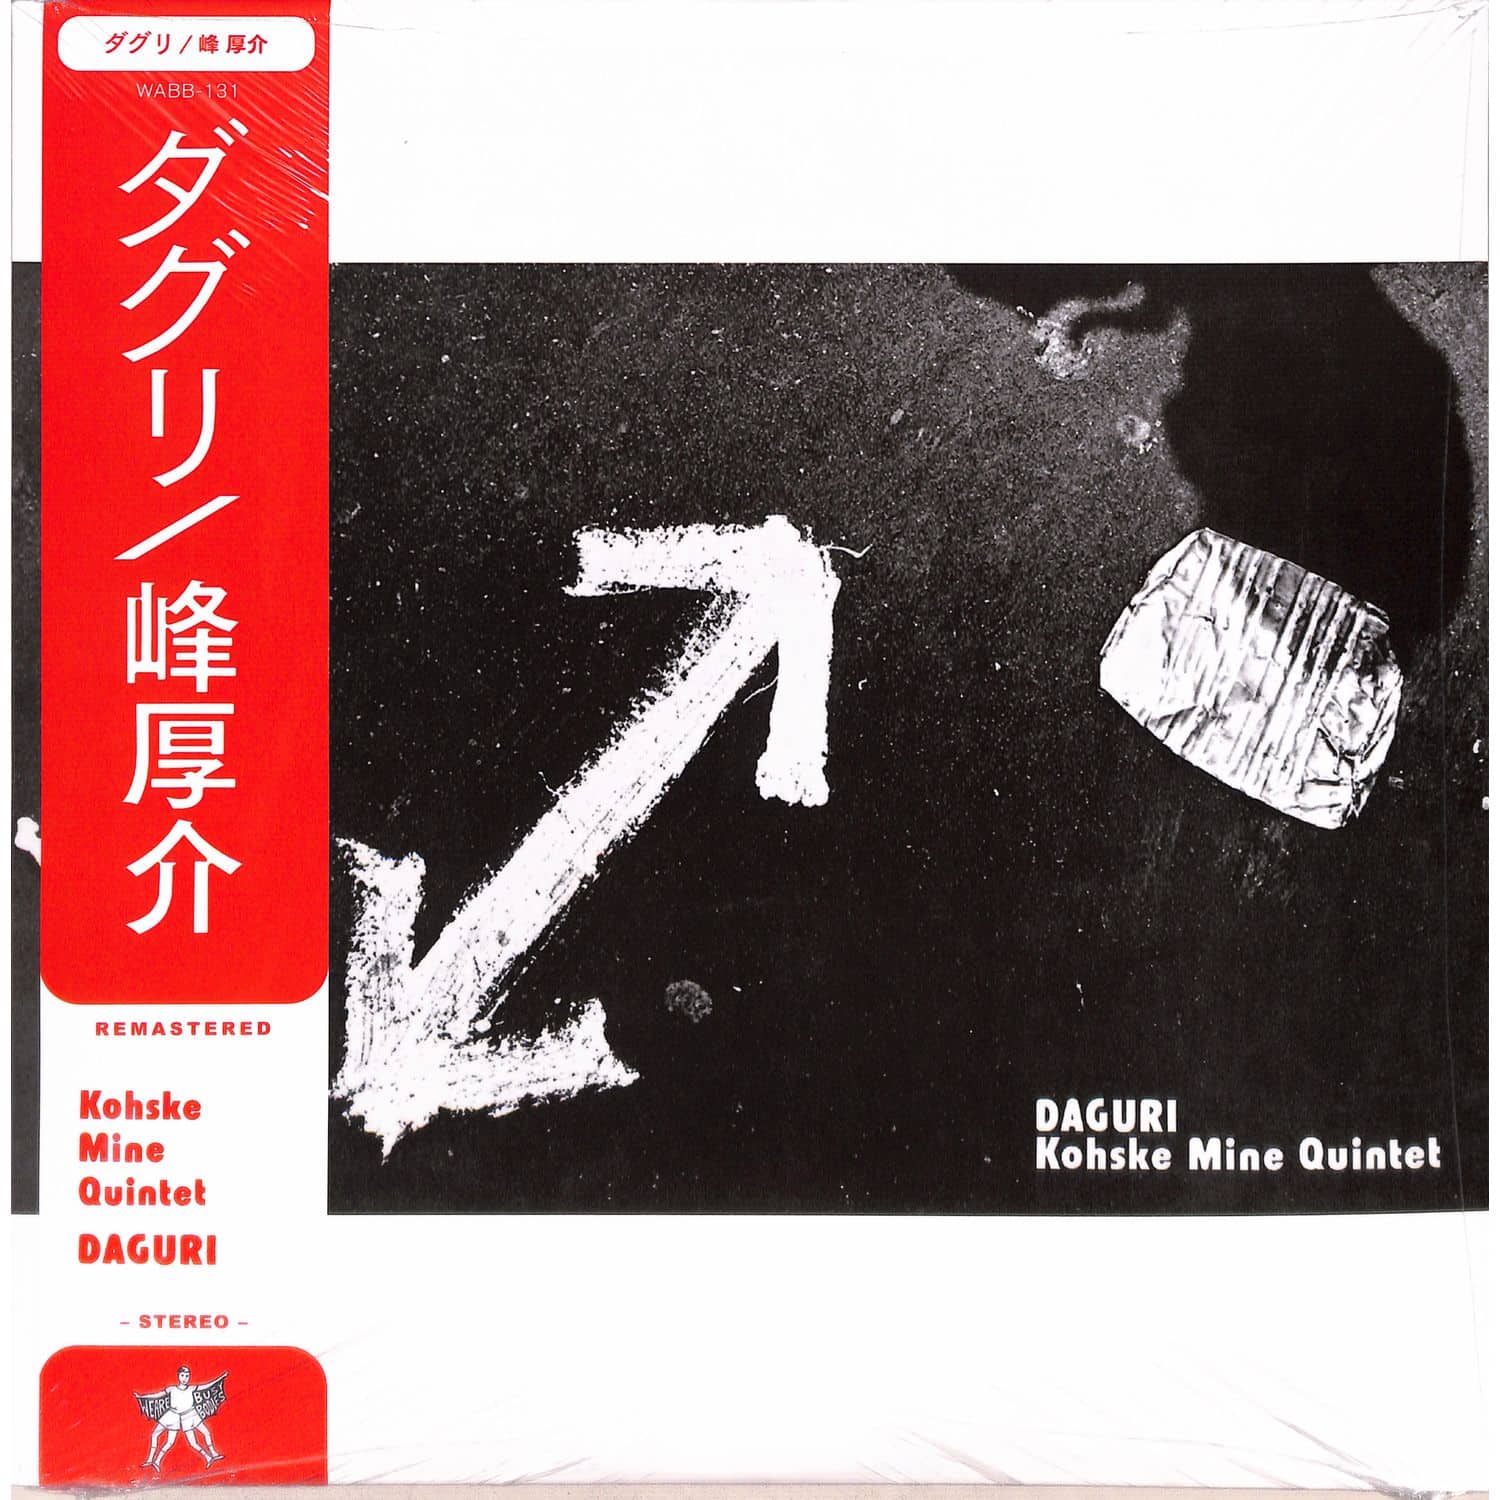 Kosuke-Quintet- Mine - DAGURI 